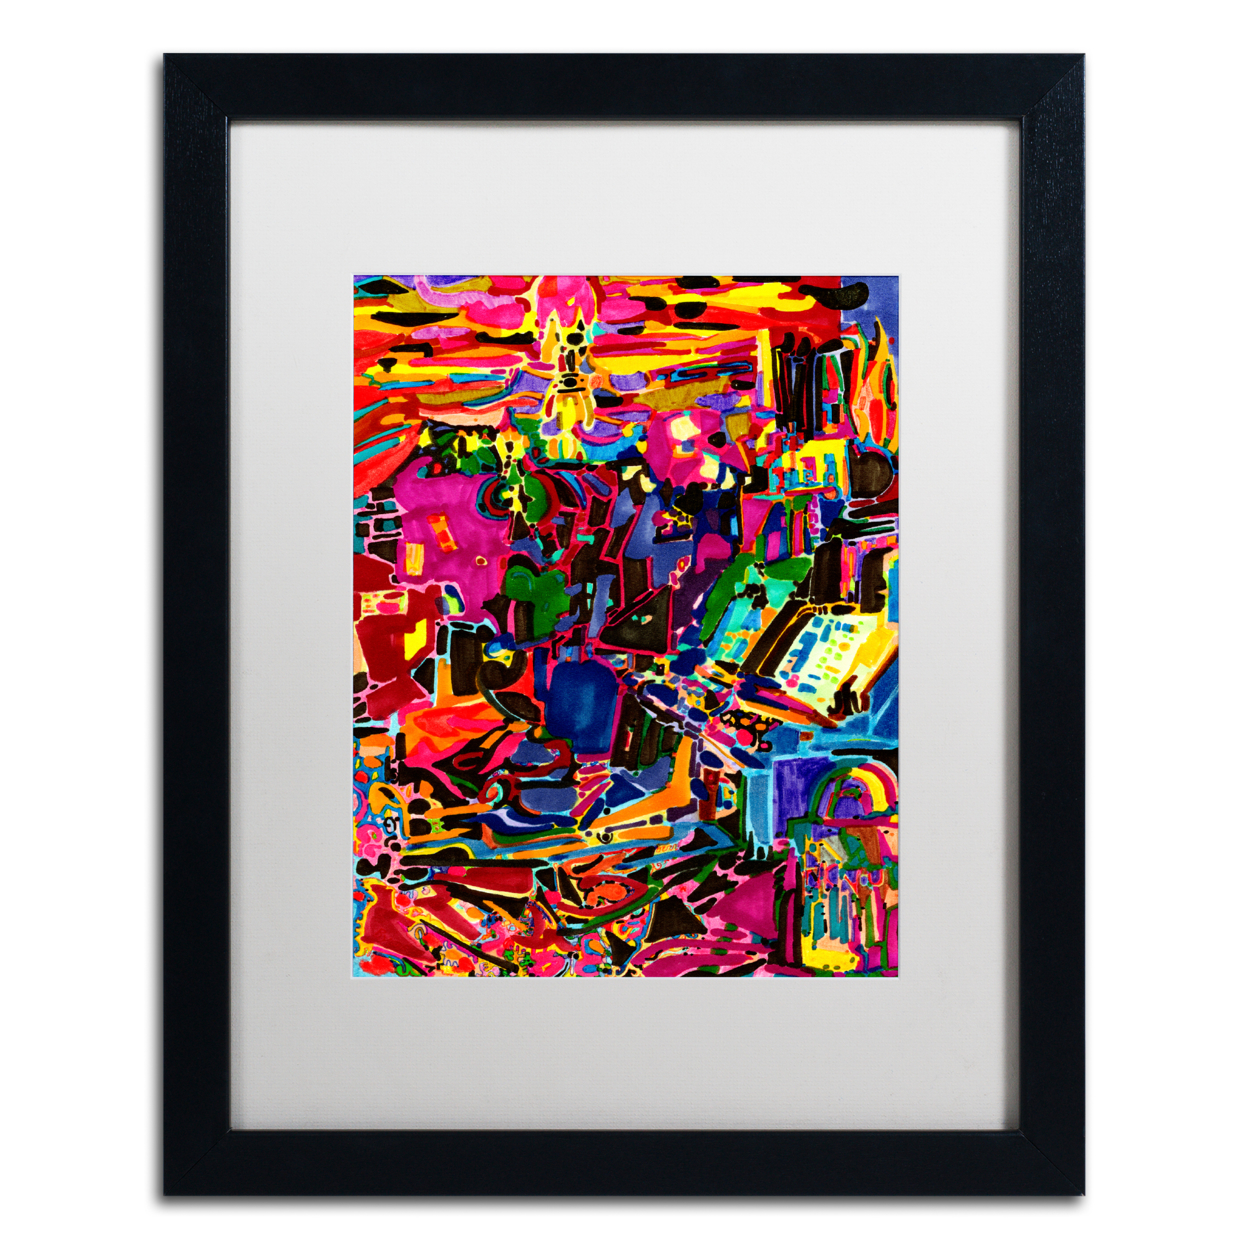 Josh Byer 'Fire In The Arcade' Black Wooden Framed Art 18 X 22 Inches